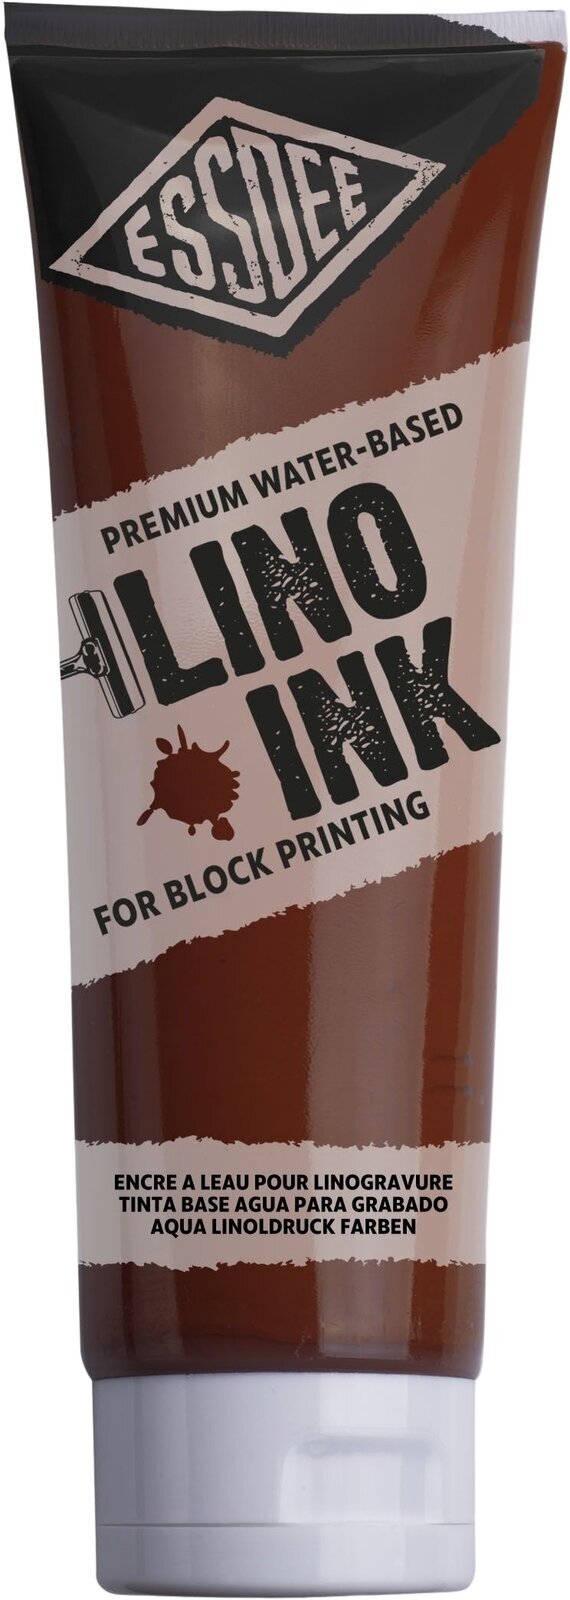 Boja za linorez Essdee Block Printing Ink Boja za linorez Burnt Sienna 300 ml